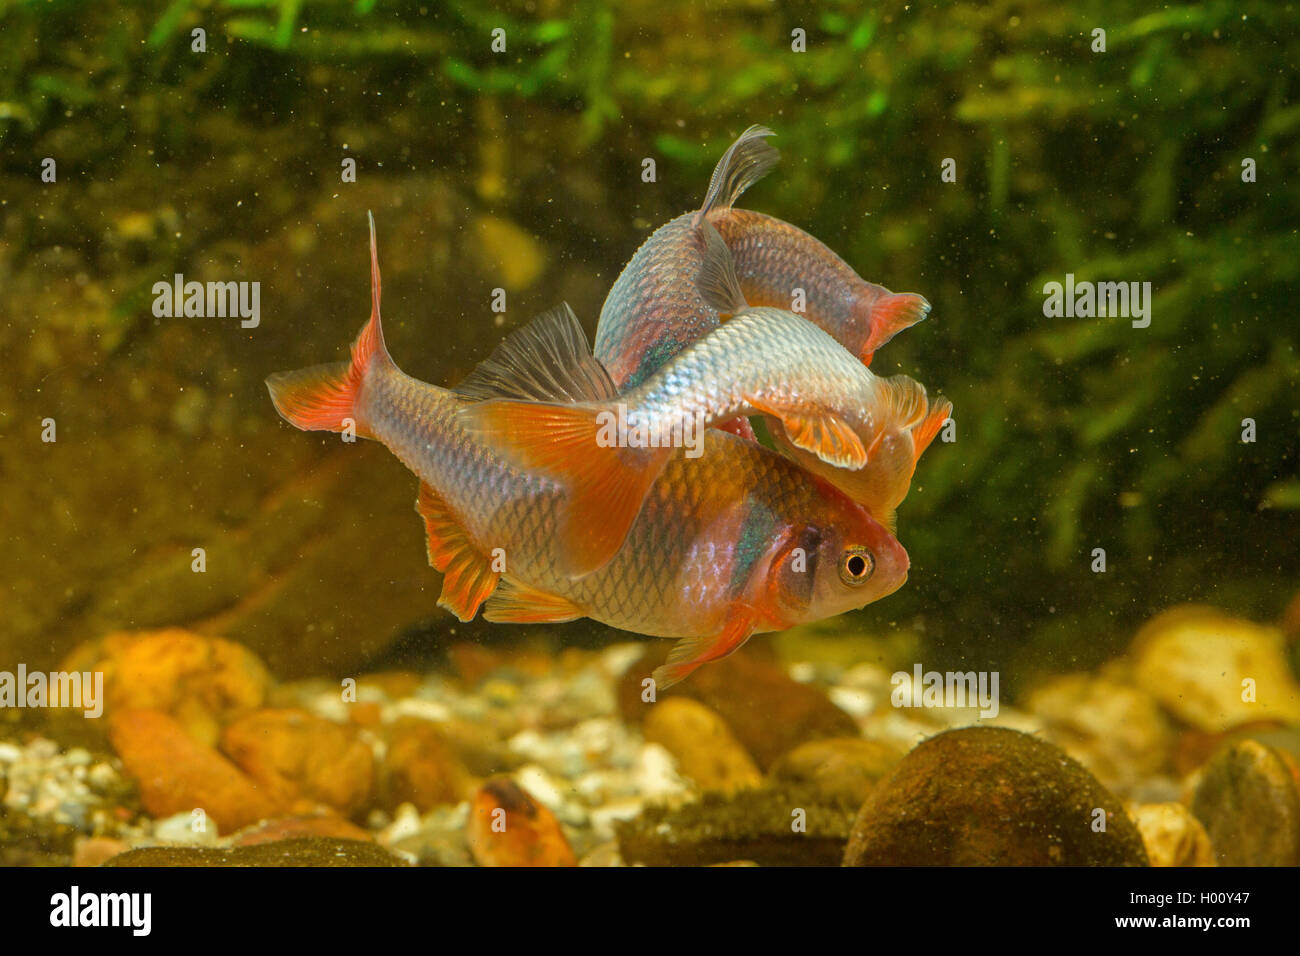 Aquarium Fish Red Shiner Redhorse Minnow Stock Photo 1539056210, shiner fish